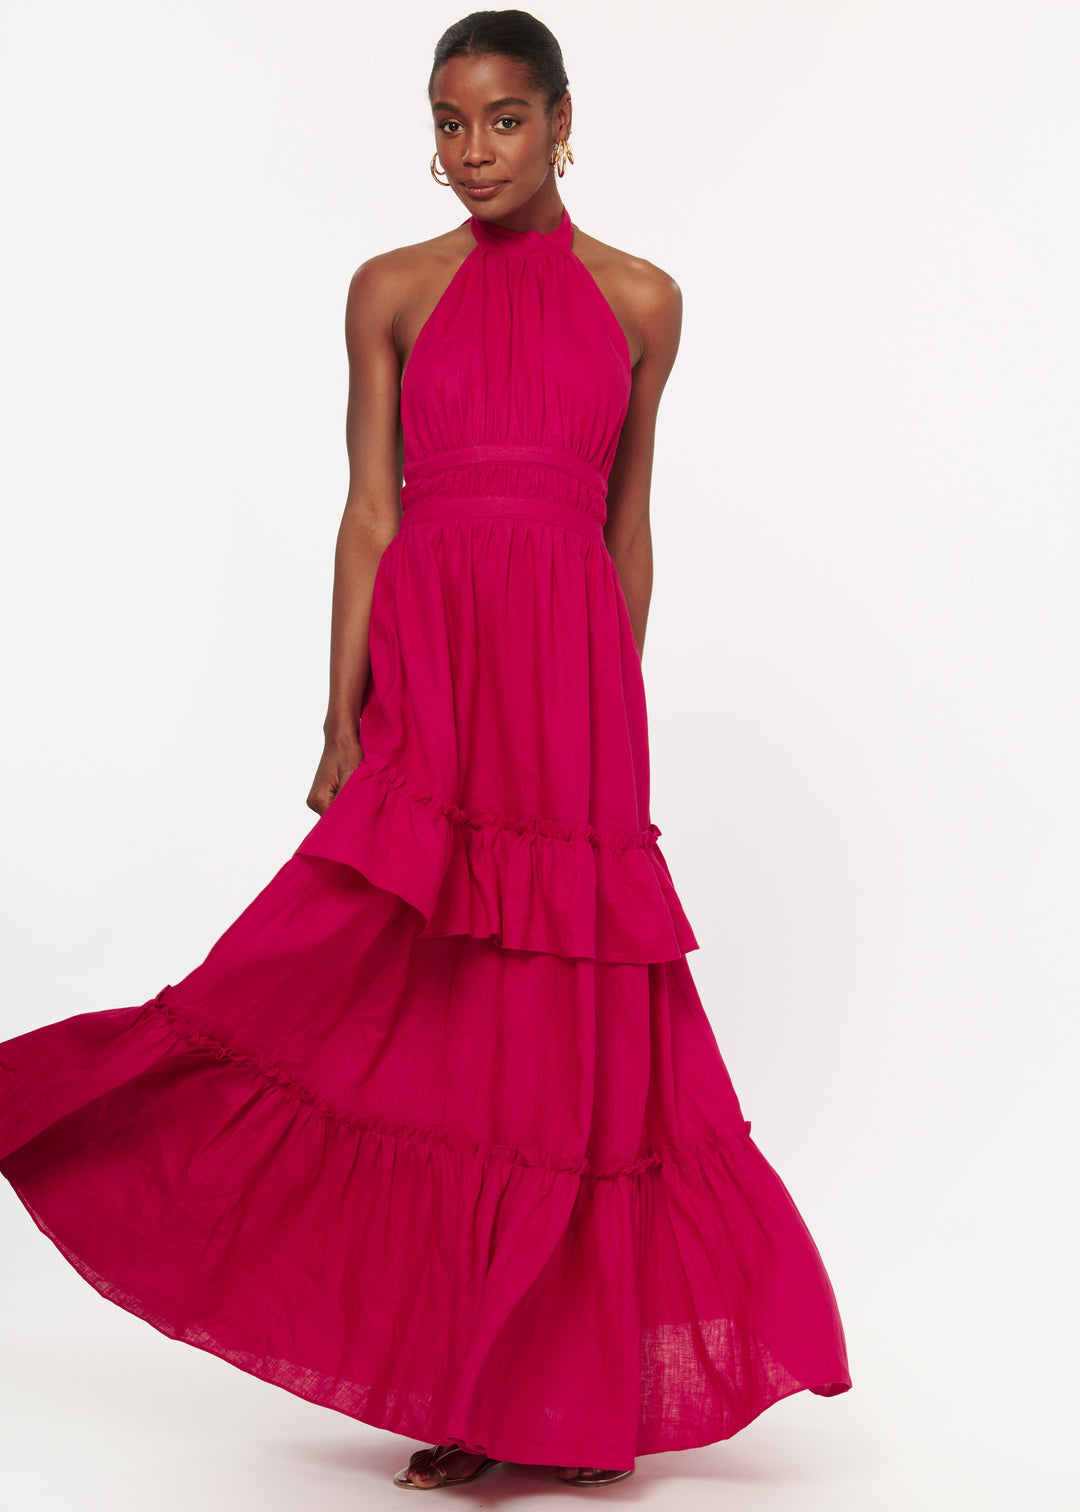 Cami NYC - Raeann Dress in Raspberry